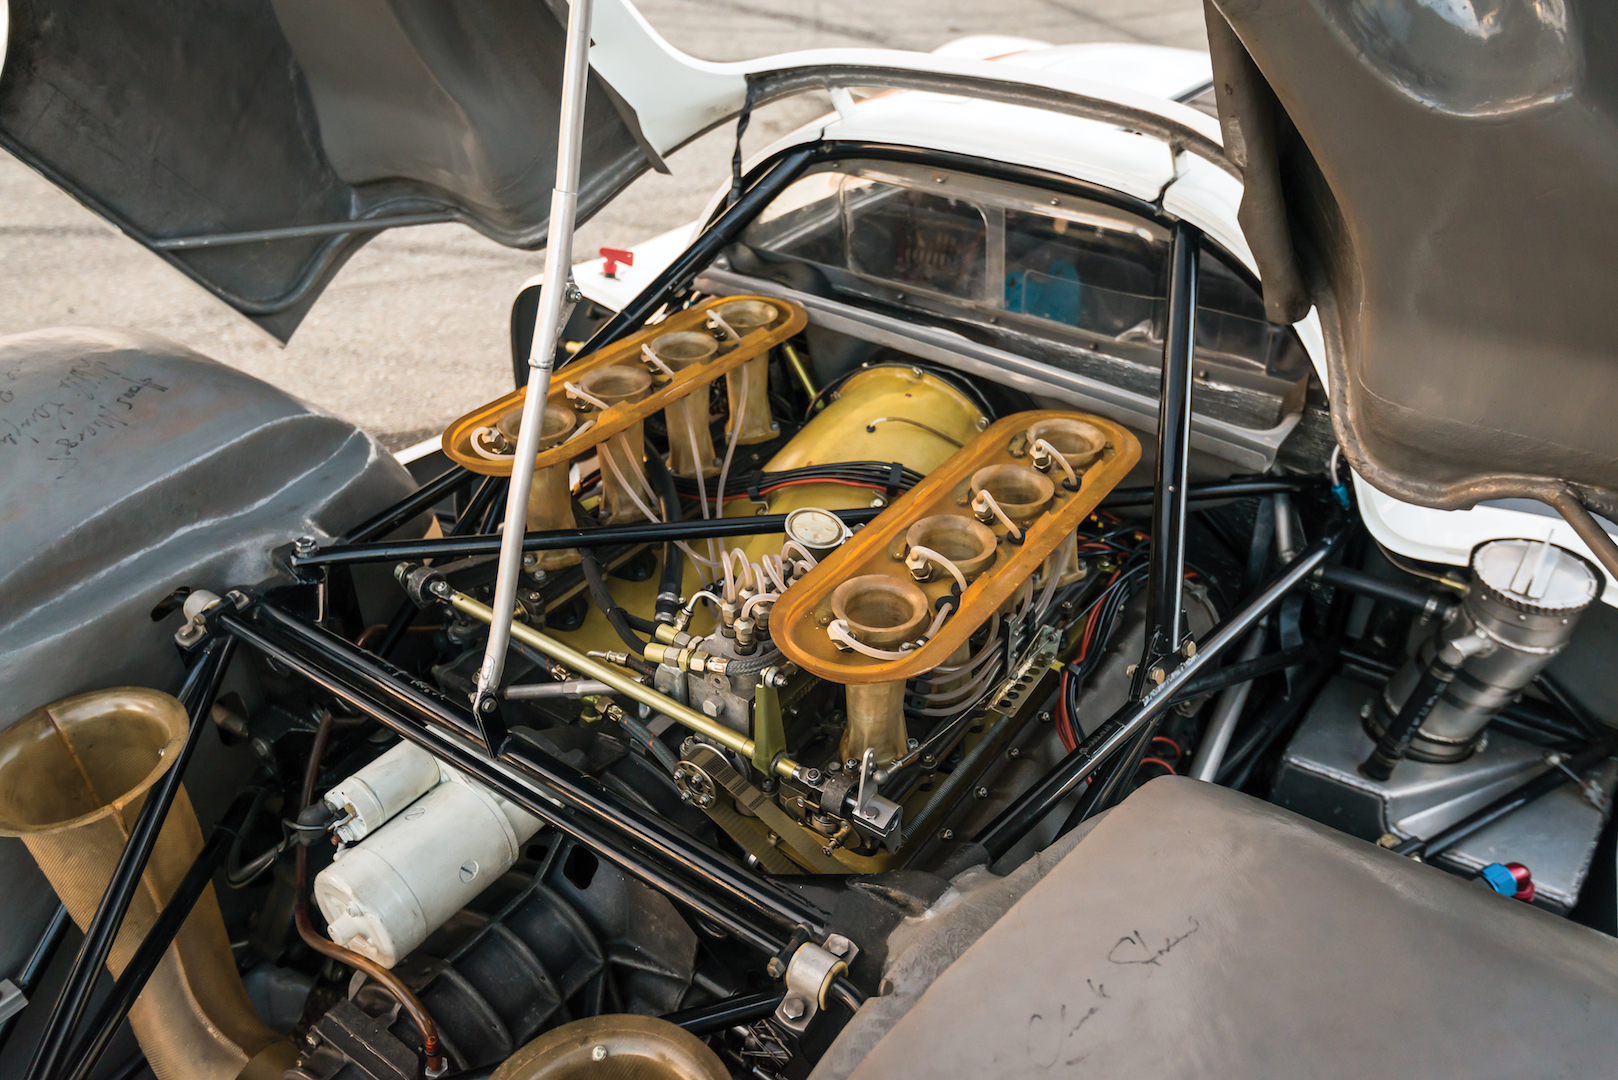 Take to the Road 1968 Porsche 908 Works Short Tail to headline Monterey sale